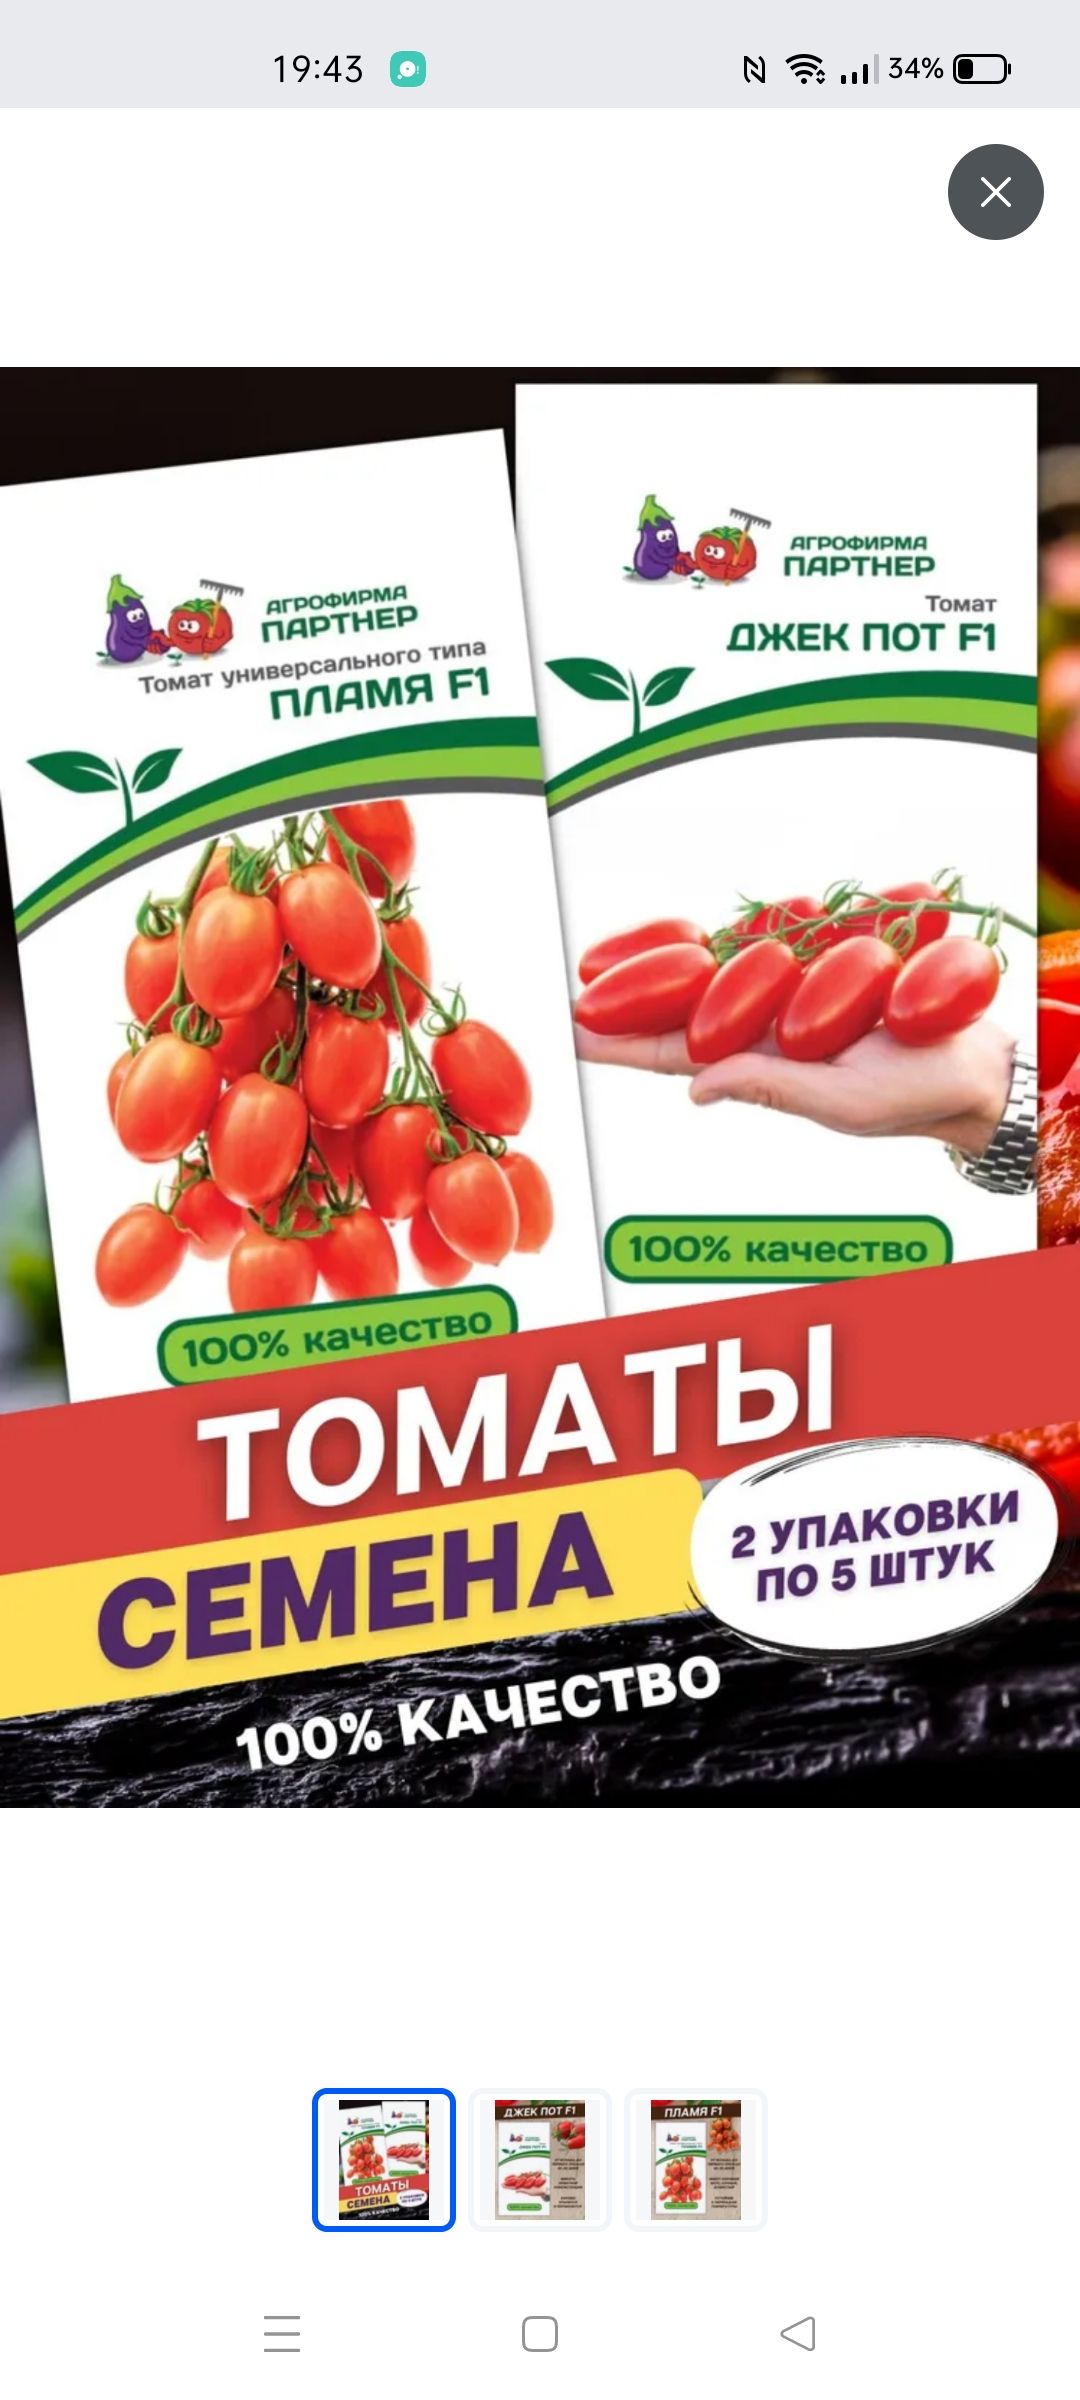 Семена томата пламя. Пламя Агрофирма партнер томат. Семена томат пламя f1. Томат Джек пот f1 10 шт (партнер). Семена томат Джек пот f1.